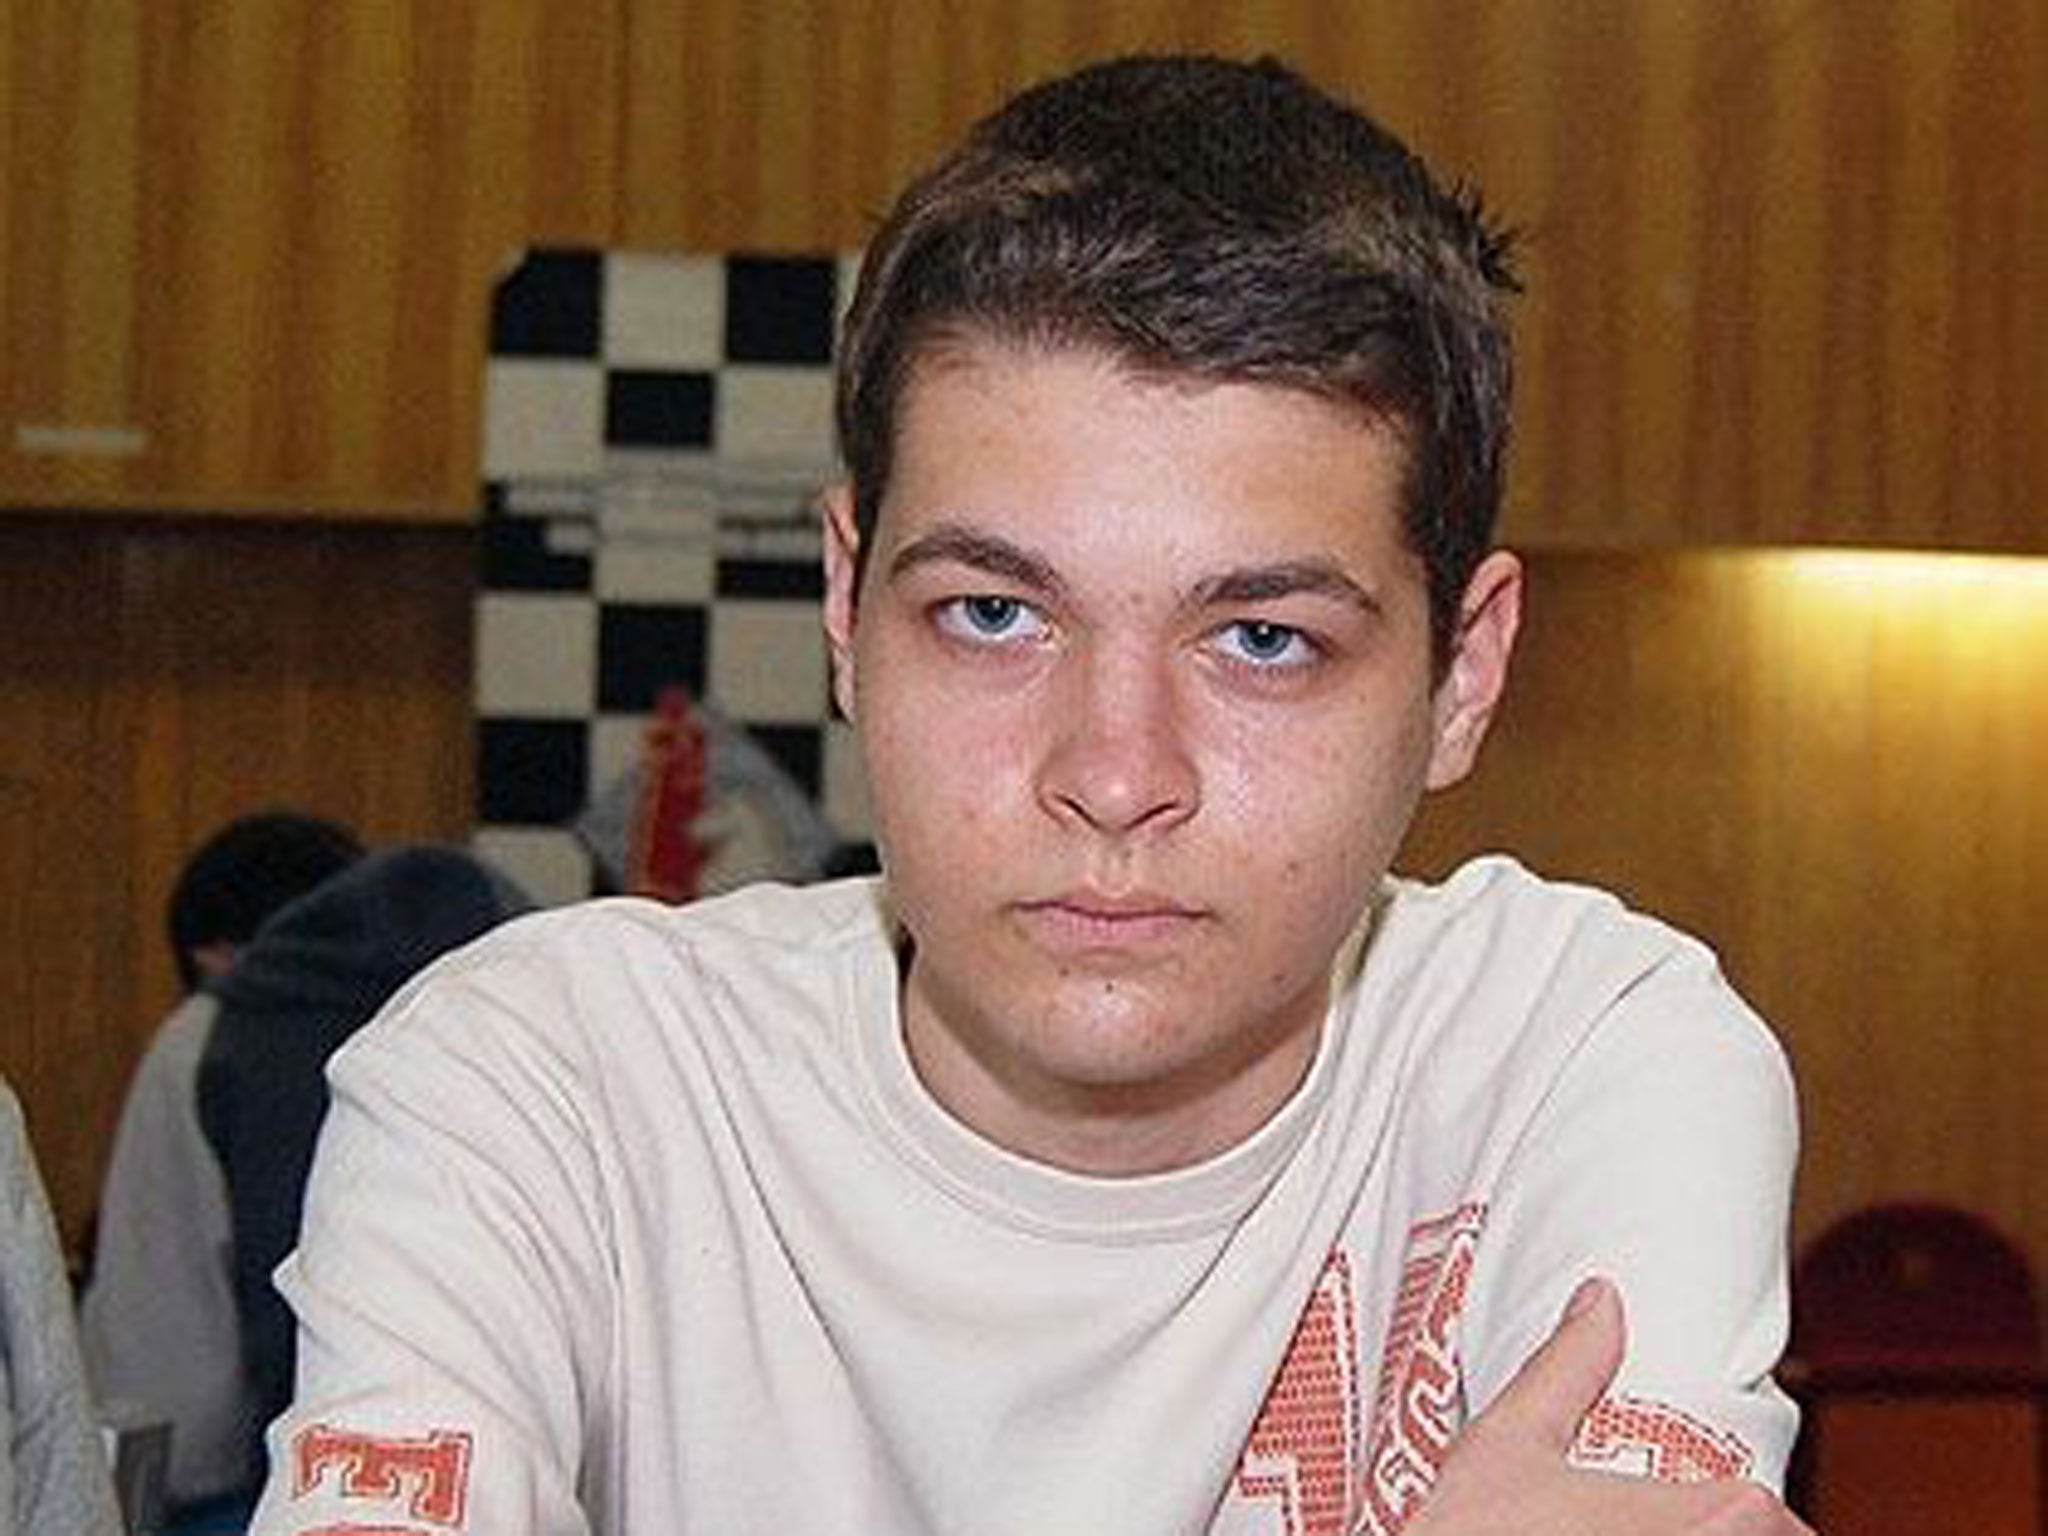 Master stroke: Chess champion Borislav Ivanov was accused of hiding devices under his shirt